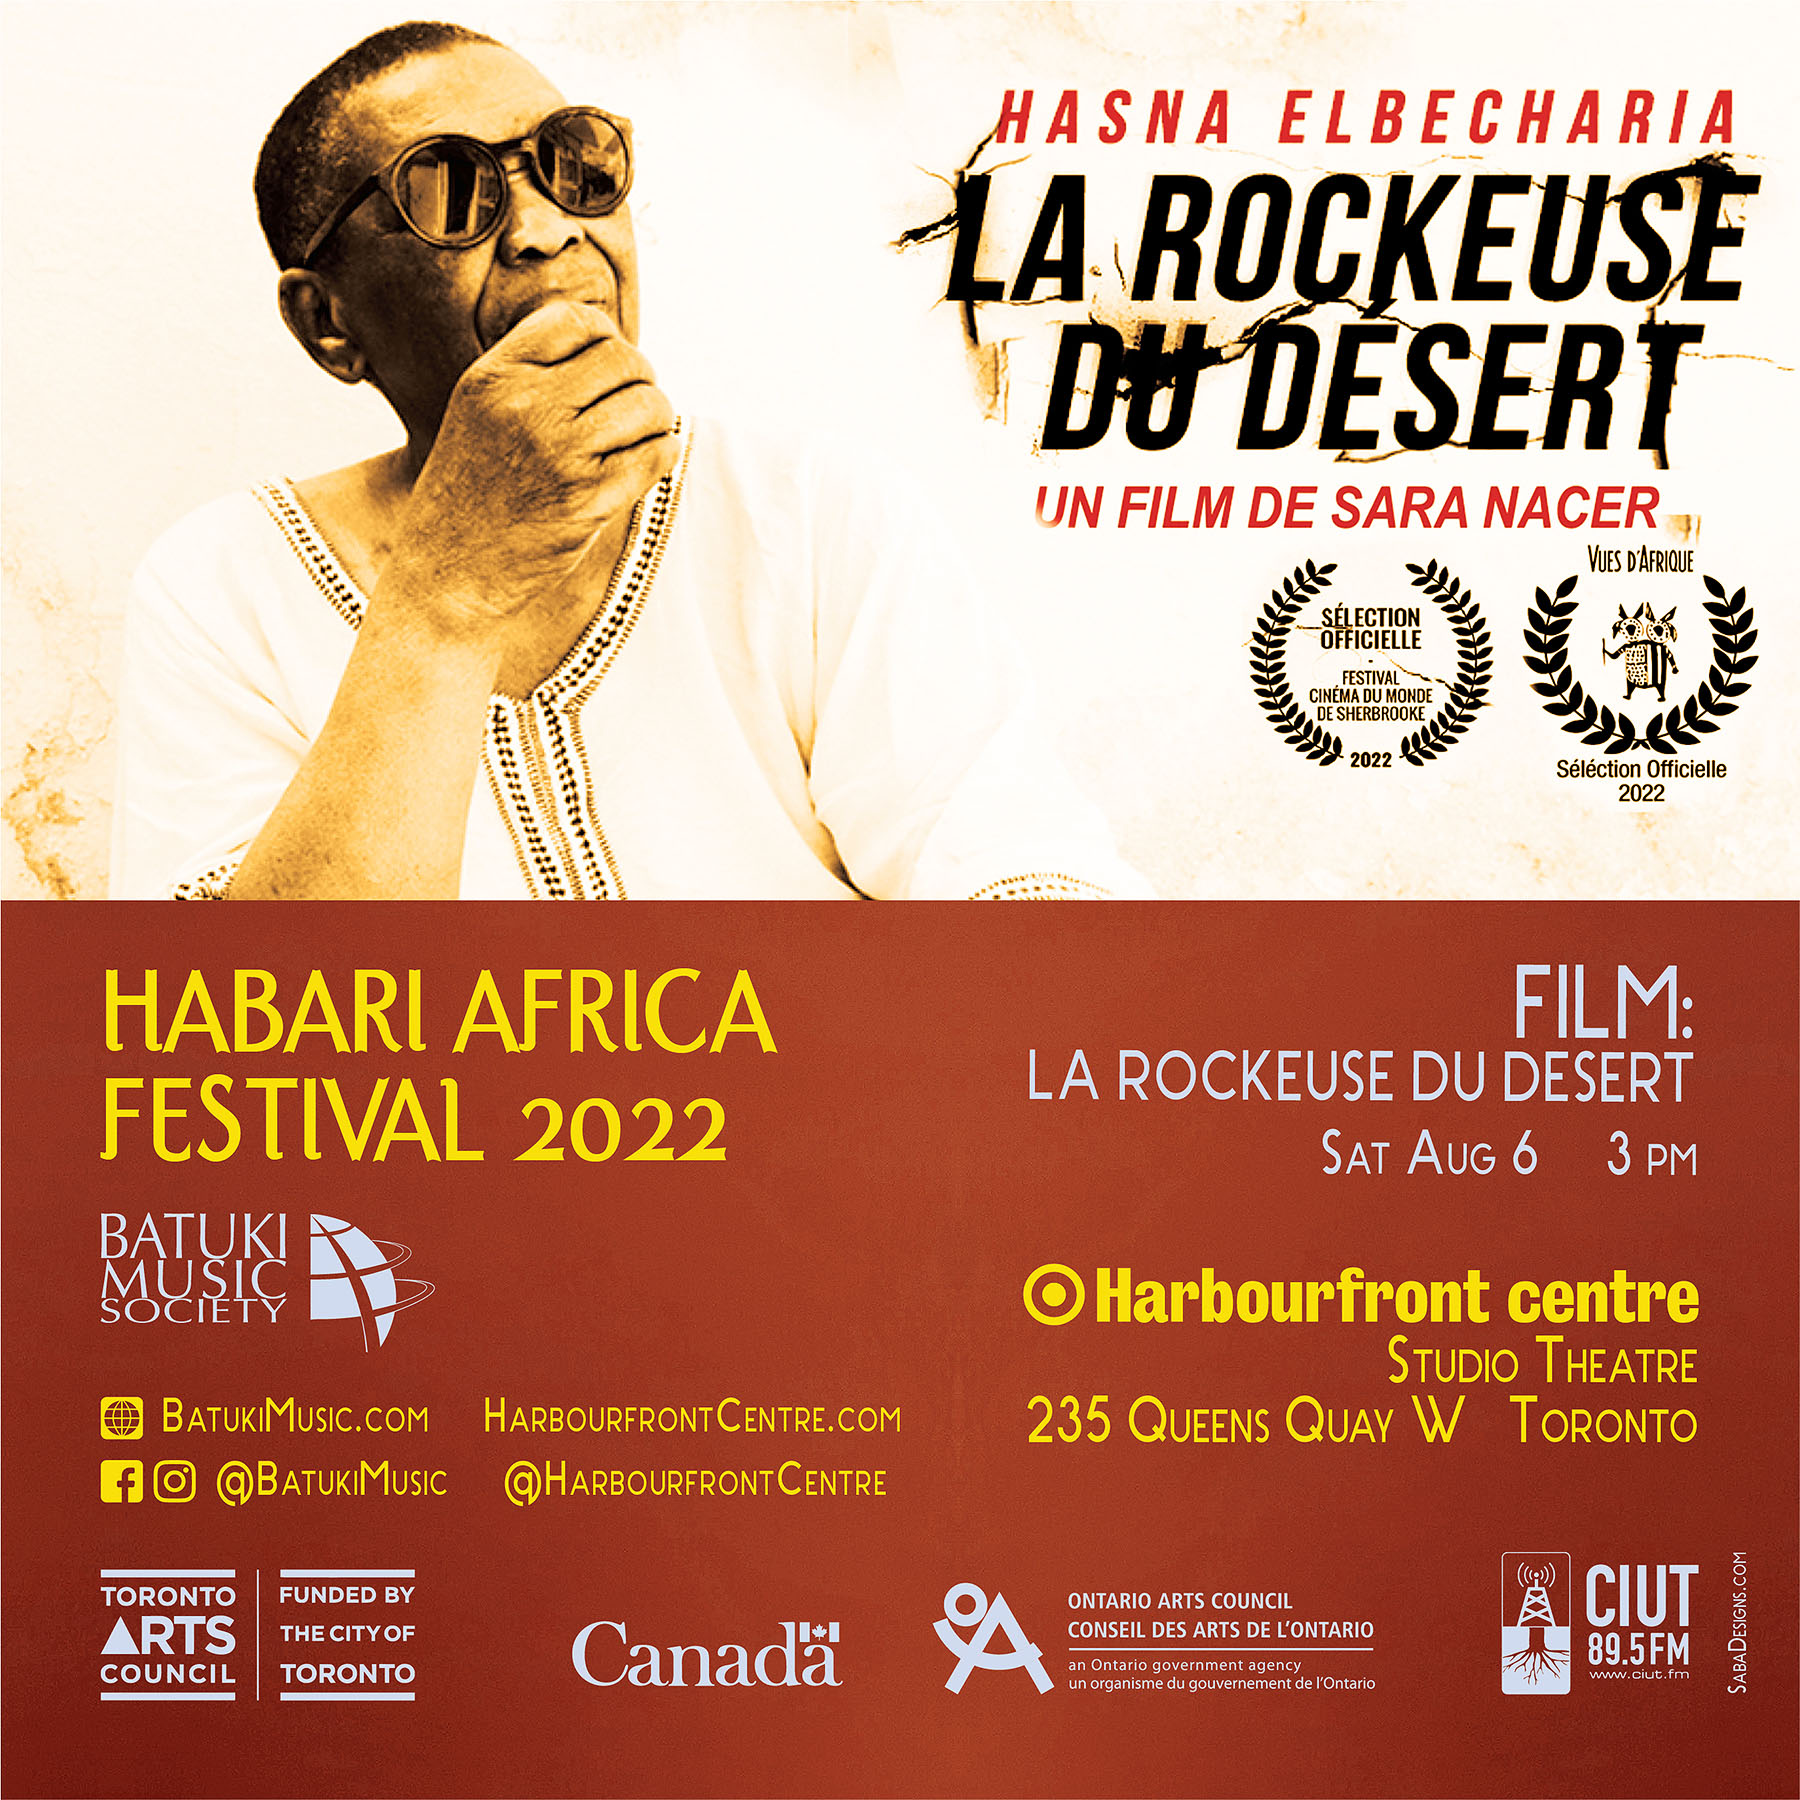 Habari Africa Live Festival 2022 by Batuki Music Society La Rockeuse du desert